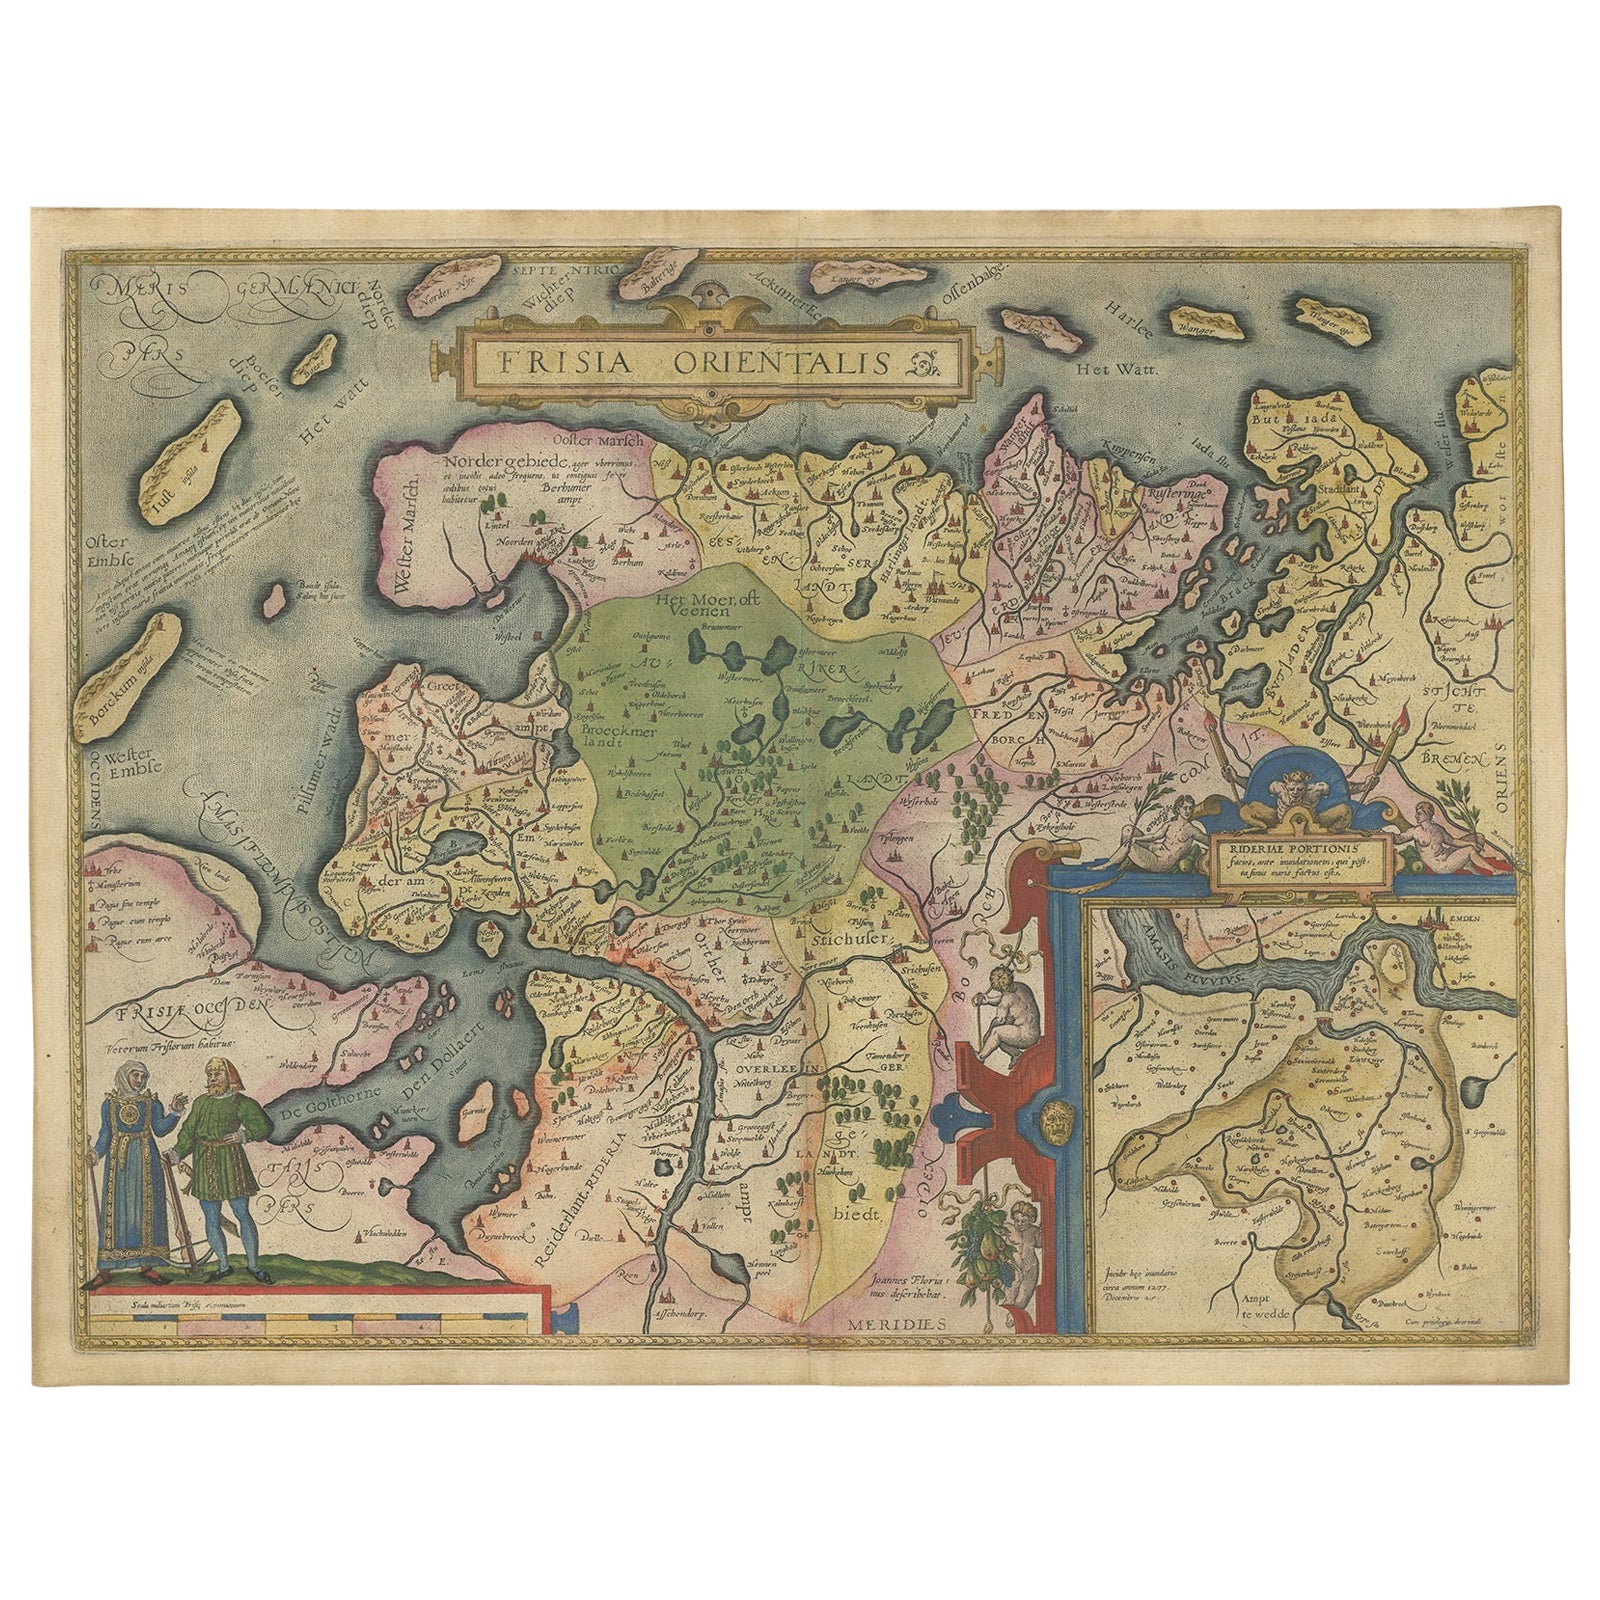 Map of East Frisian Islands & Northwestern Tip of Germany, Ostfriesland, c.1595